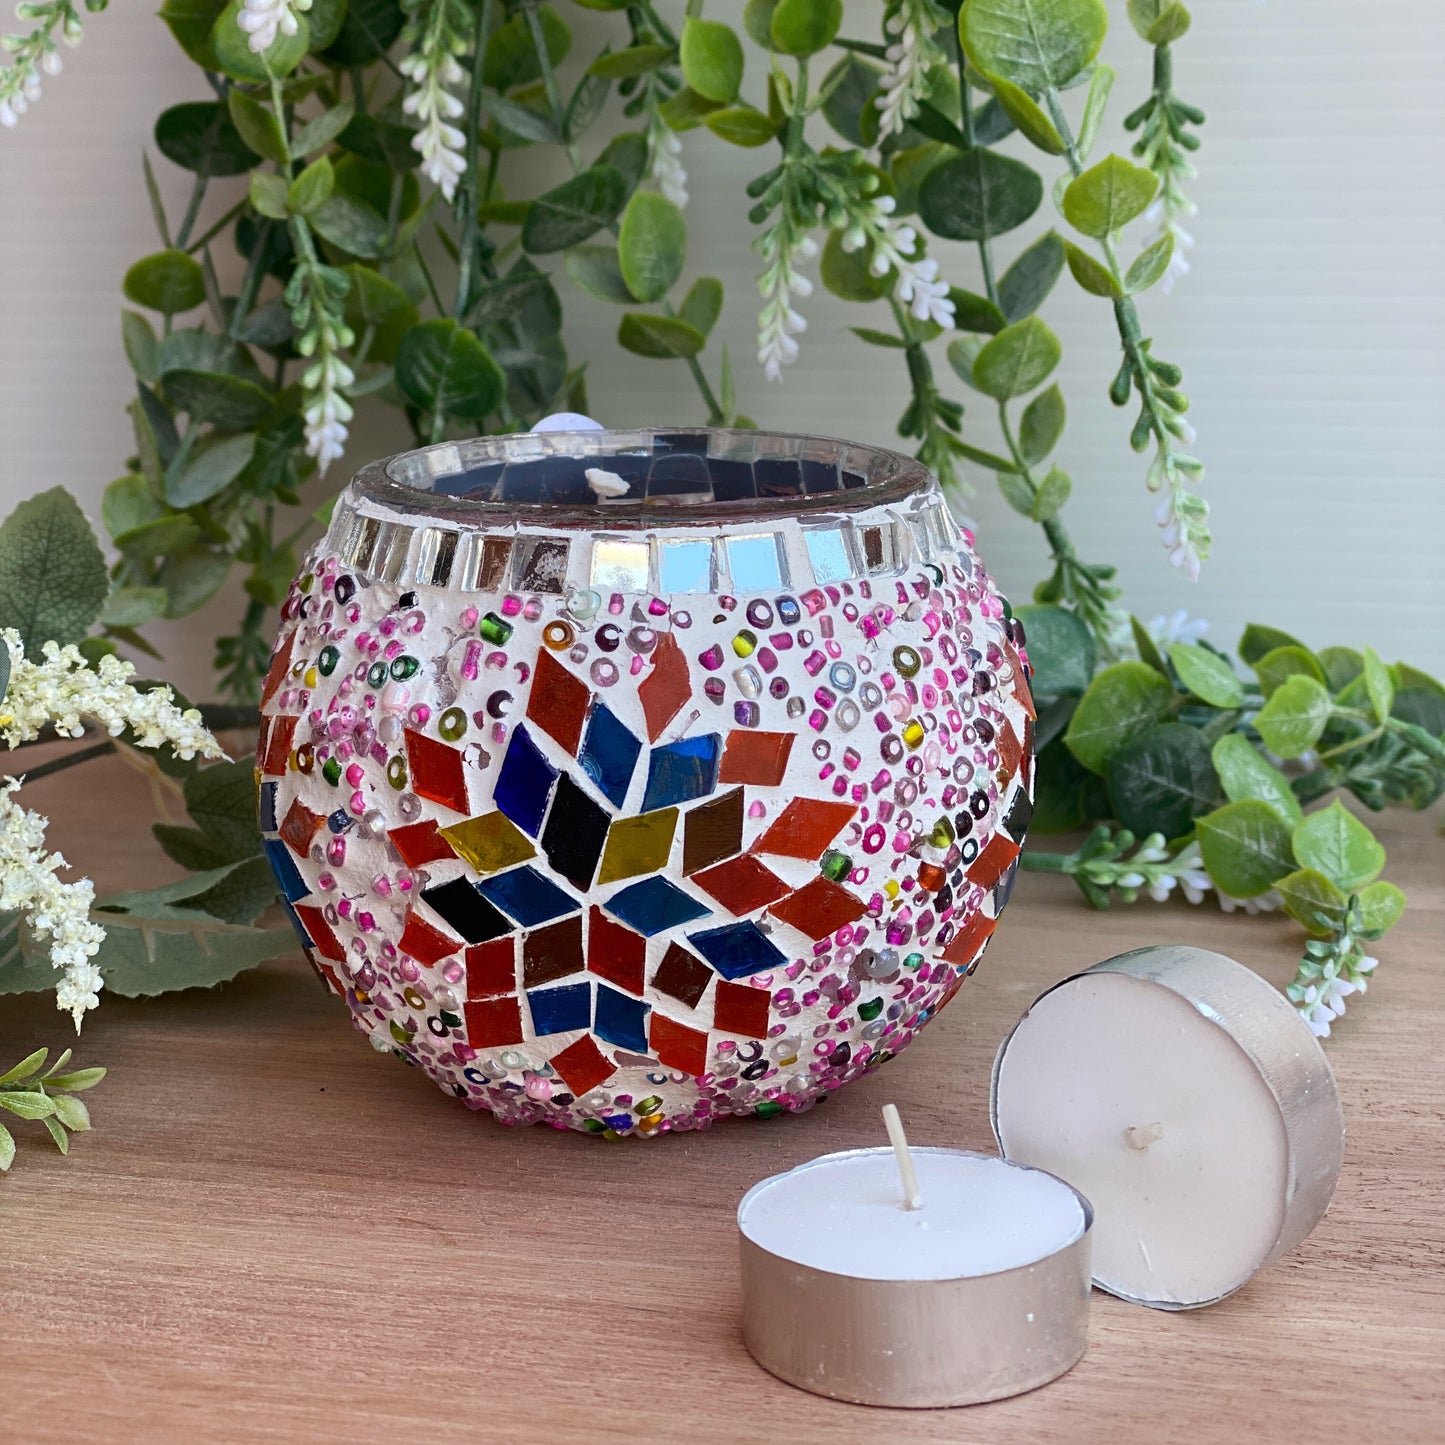 Mosaic Tea Light Ornamental Piece - Handmade in Turkey